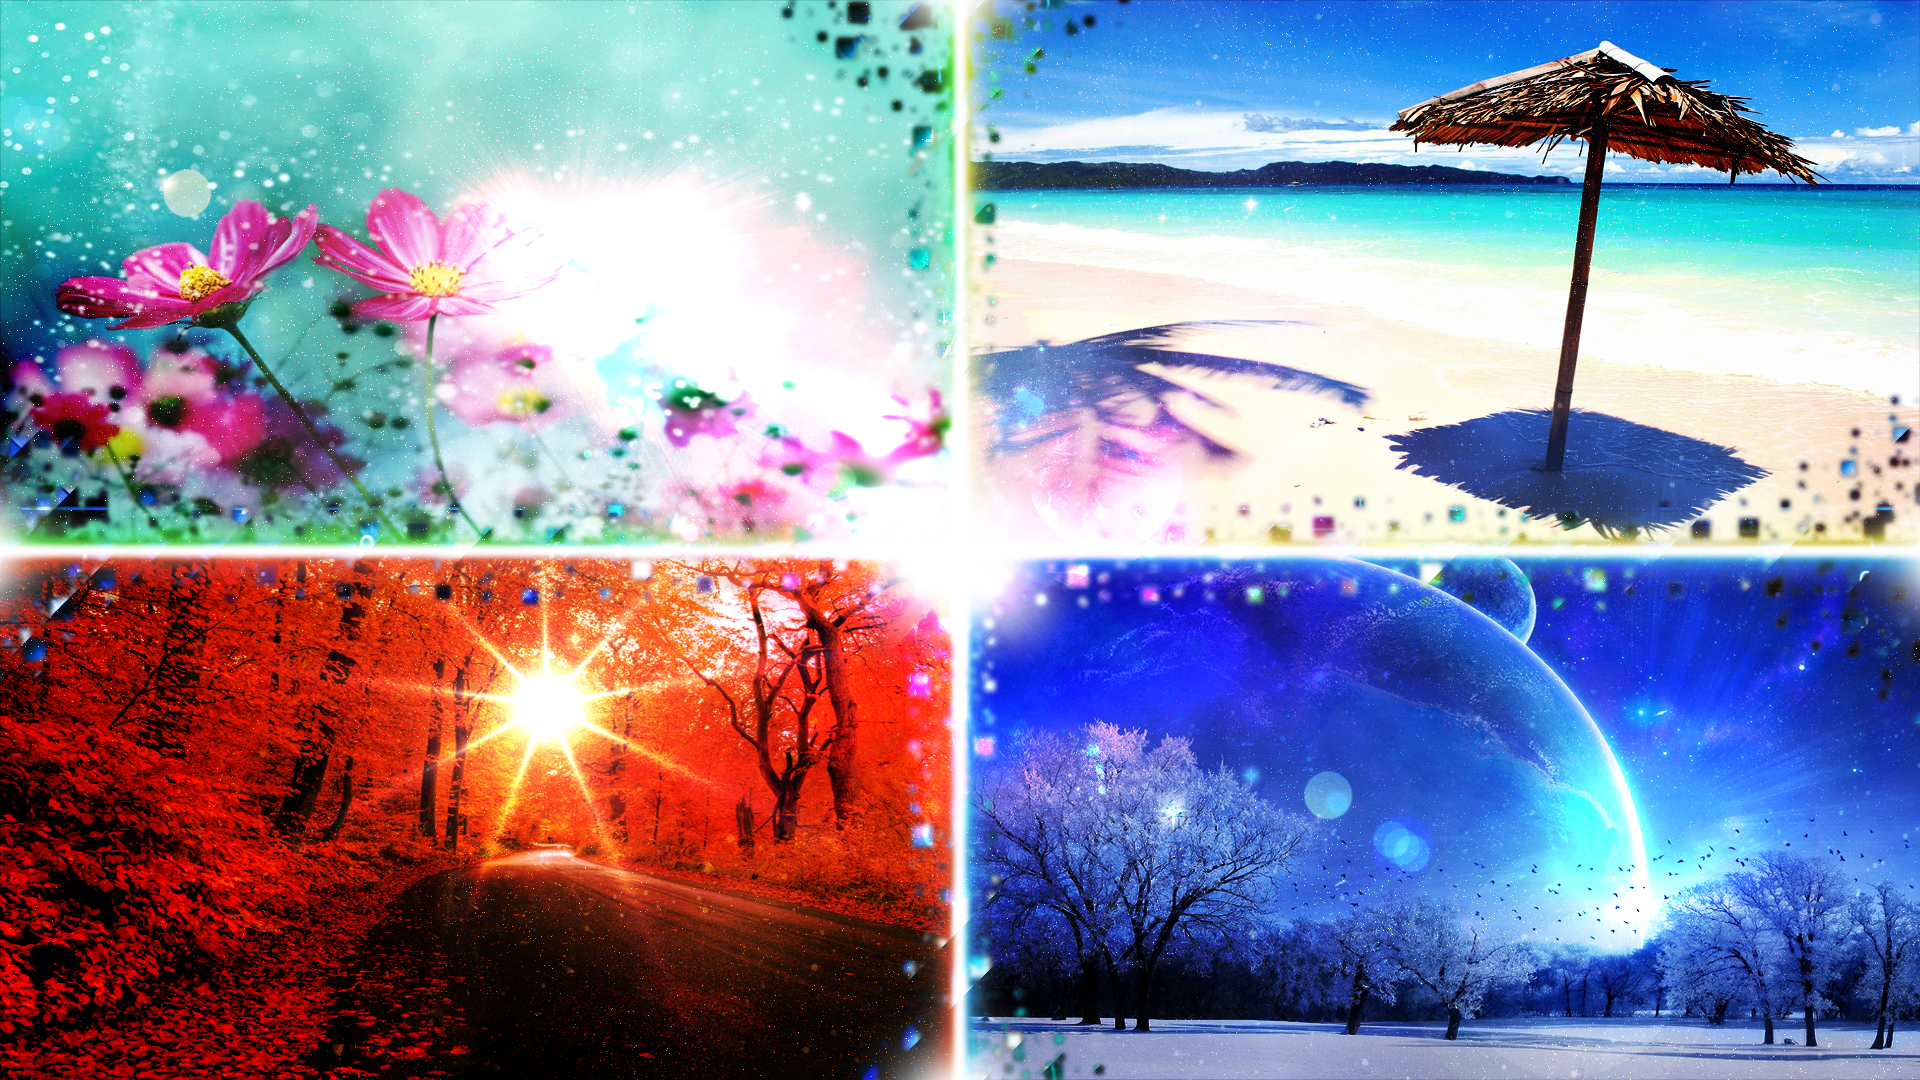 4 Seasons (Wallpaper and Edit) by Hardii on DeviantArt